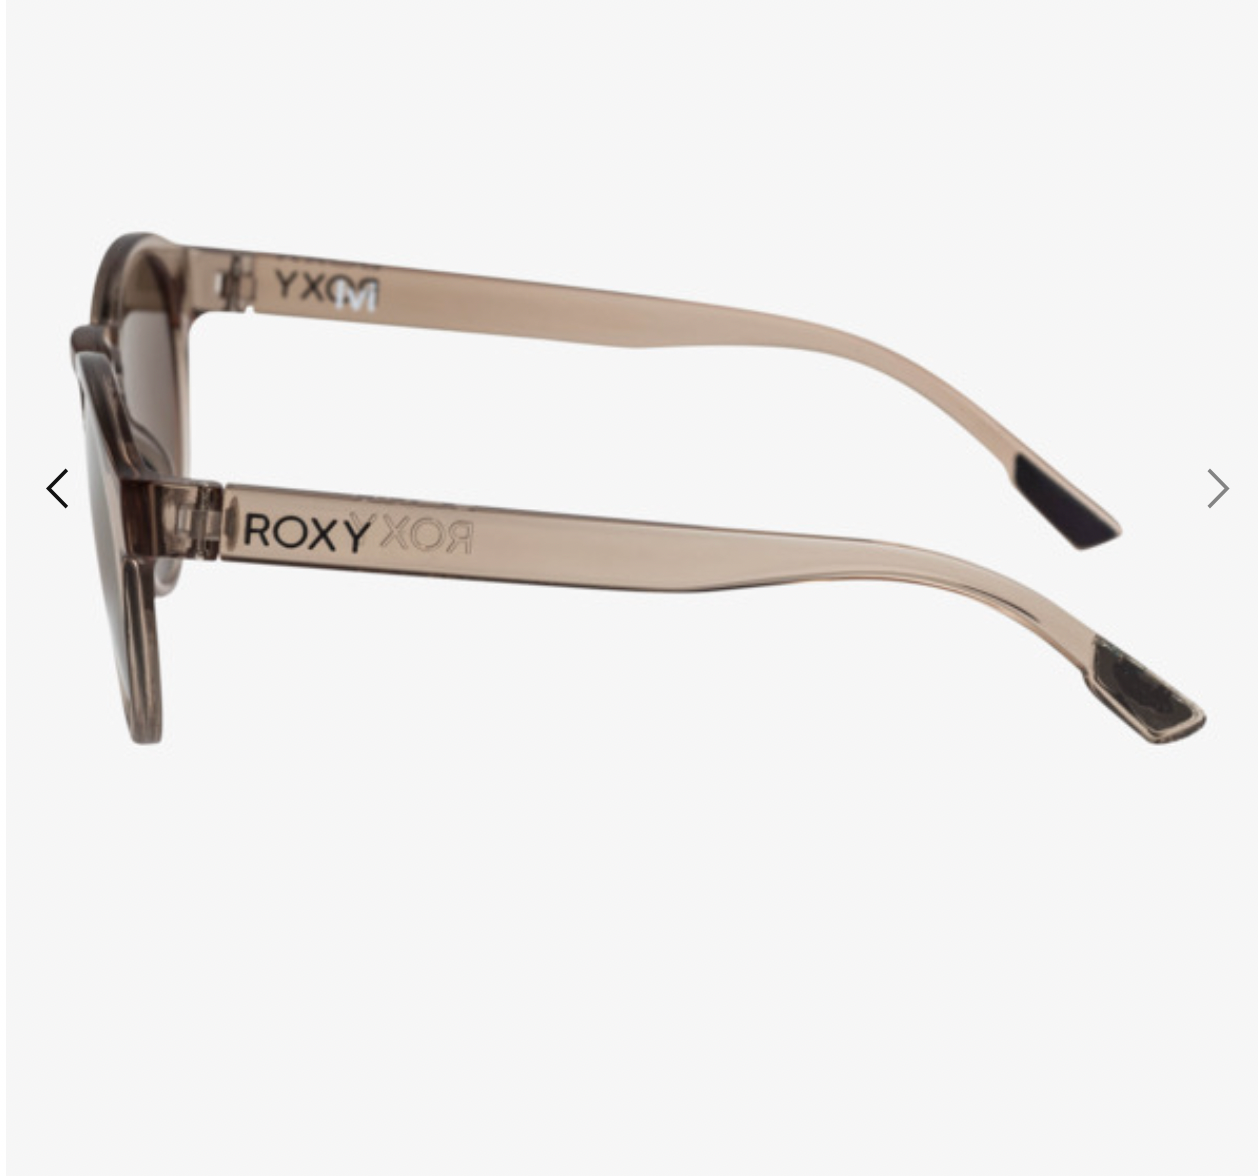 roxy Ivi - Sunglasses for Women